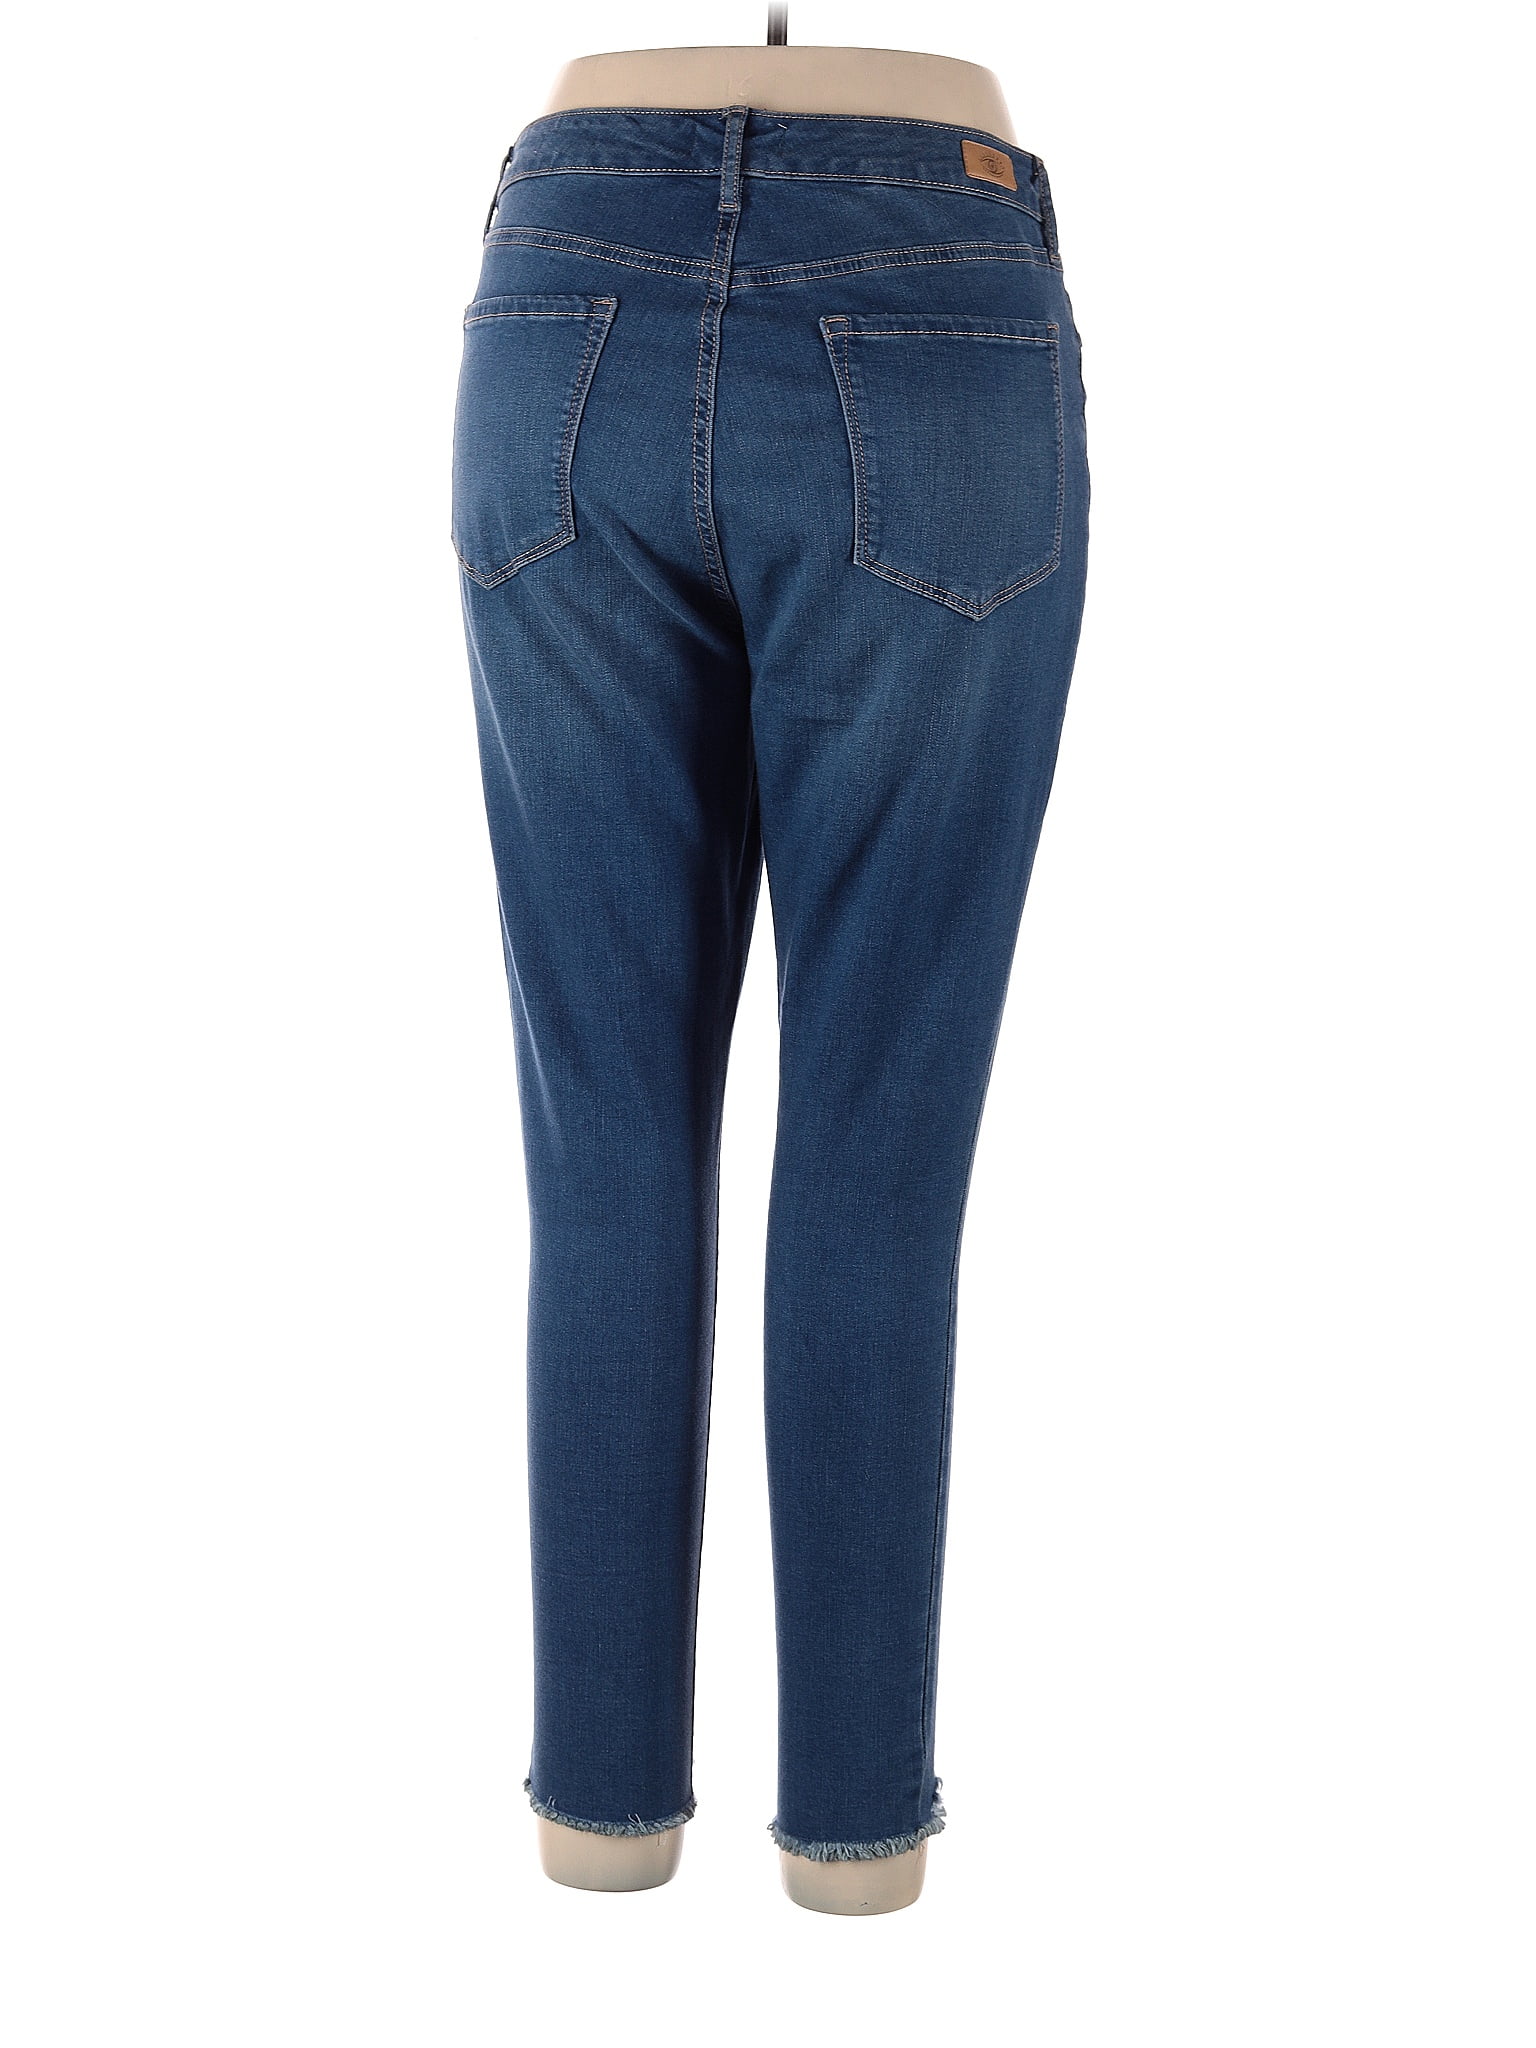 Sofia by Sofia Vergara Solid Blue Jeans Size 14 - 56% off